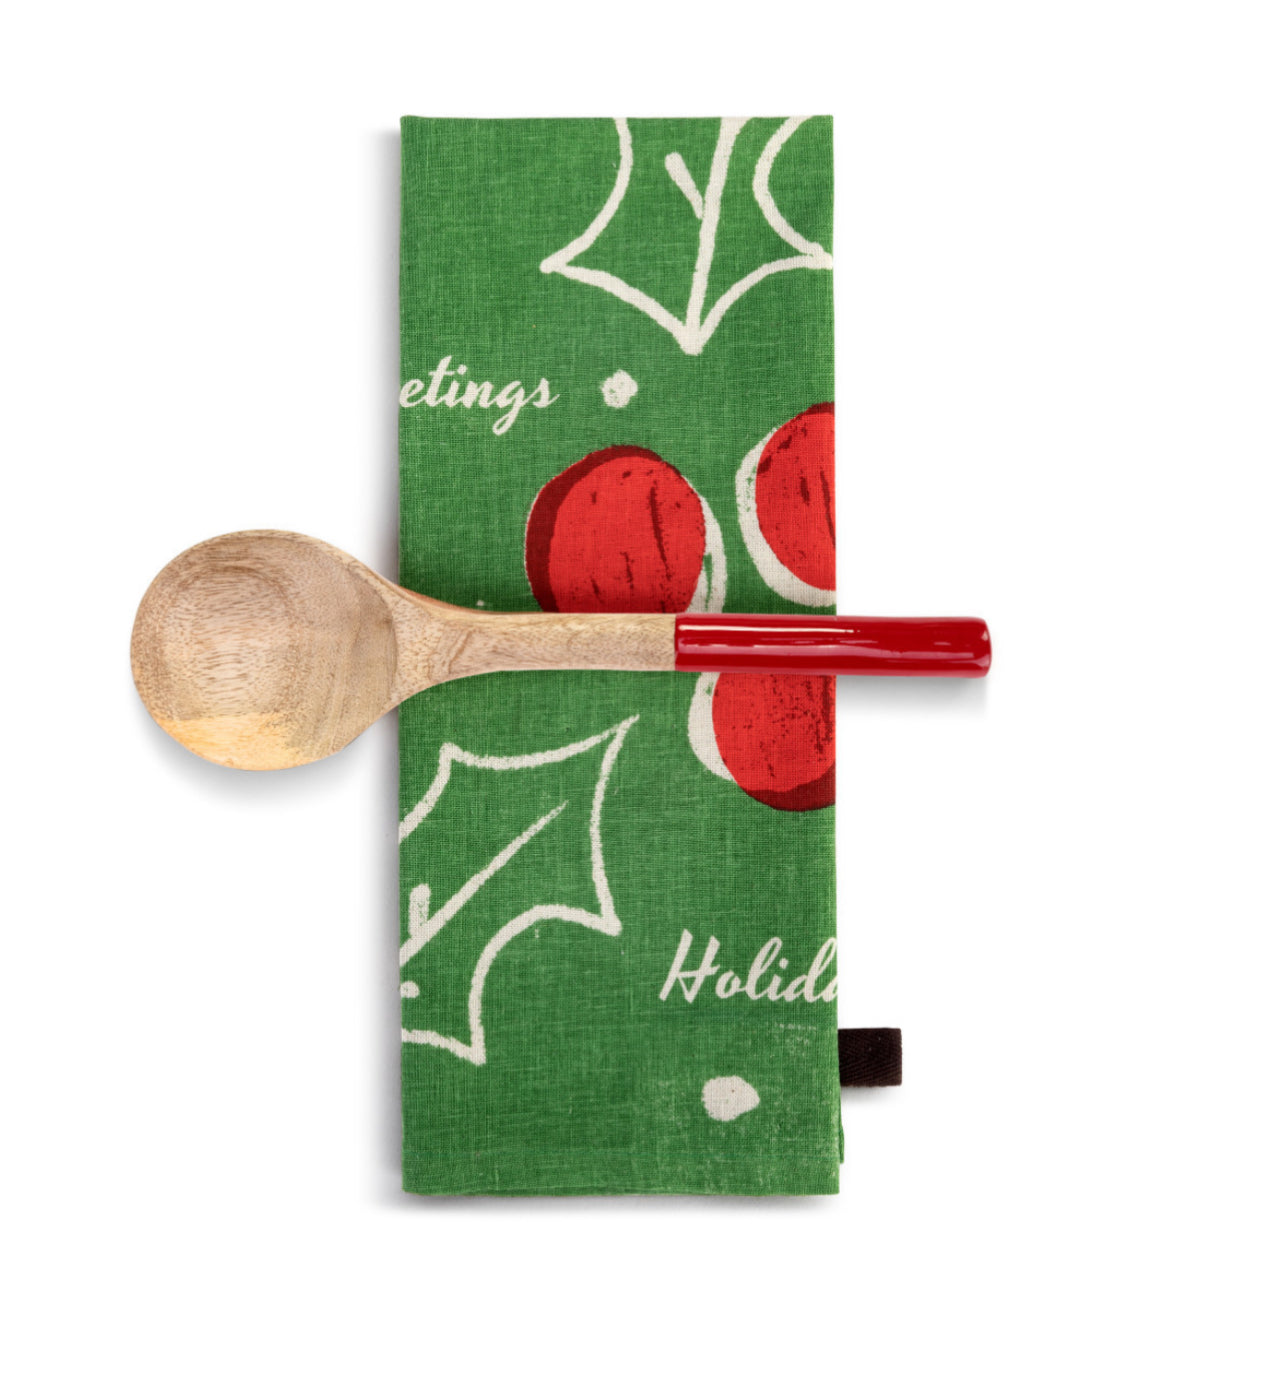 Holiday Greetings Kitchen Towel & Utensil Set